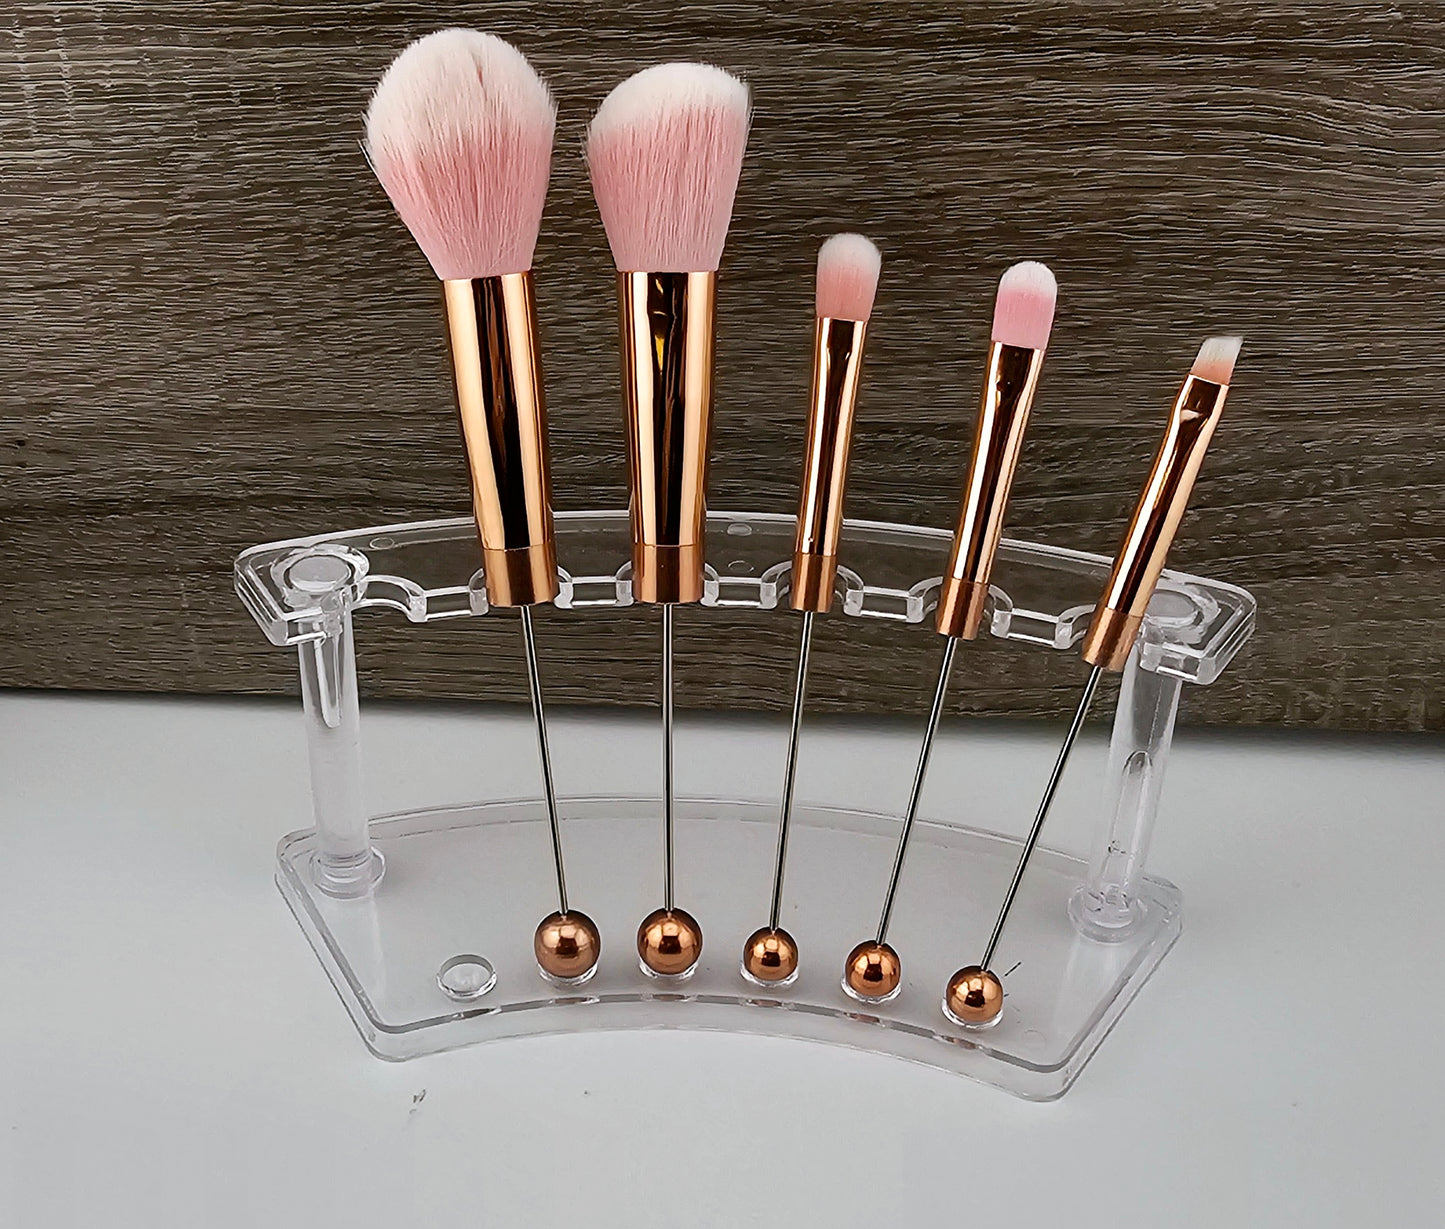 Colored Make-up Brush Sets